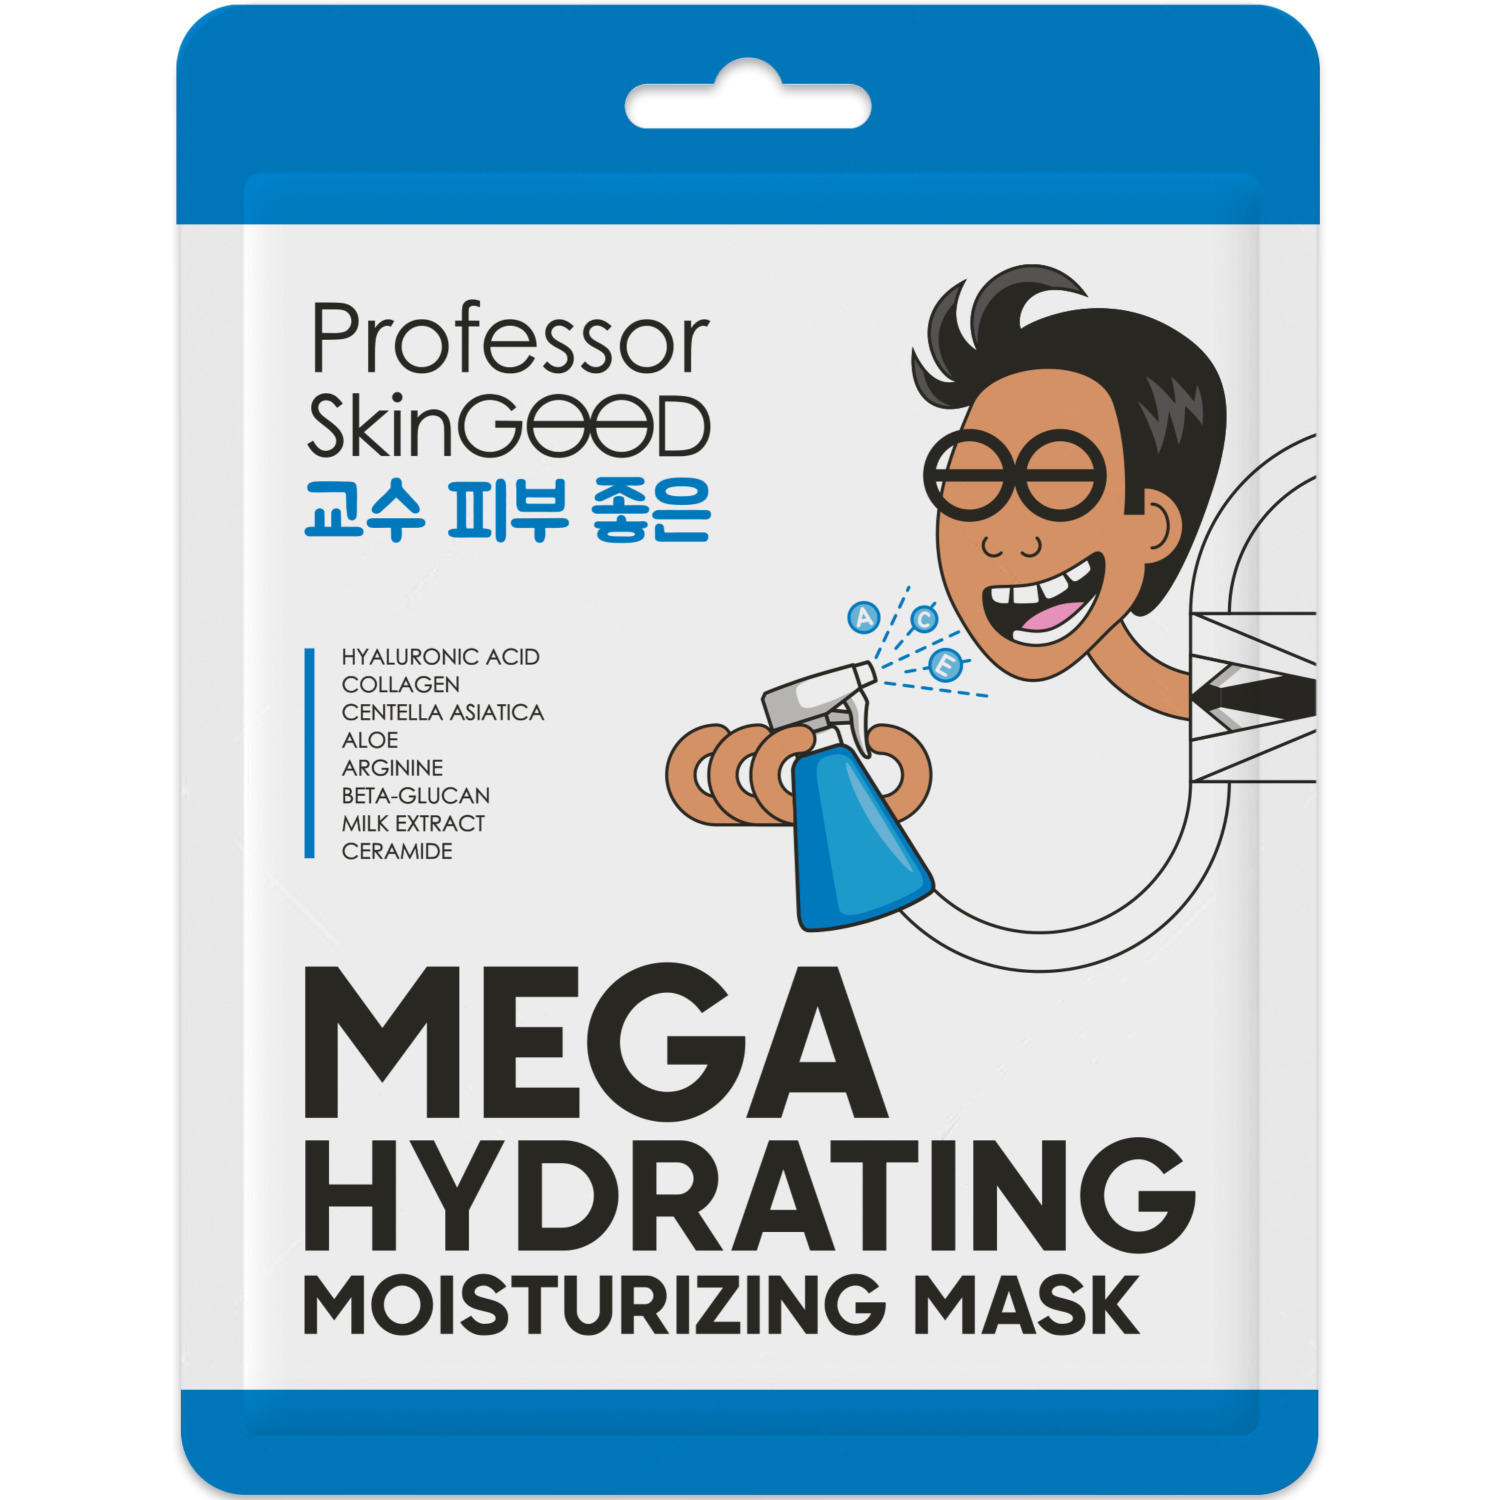 Professor SkinGOOD Увлажняющая маска Mega Hydrating Moisturizing Mask, 25 г (Professor SkinGOOD, Маски) маска для лица professor skingood маска для лица увлажняющая